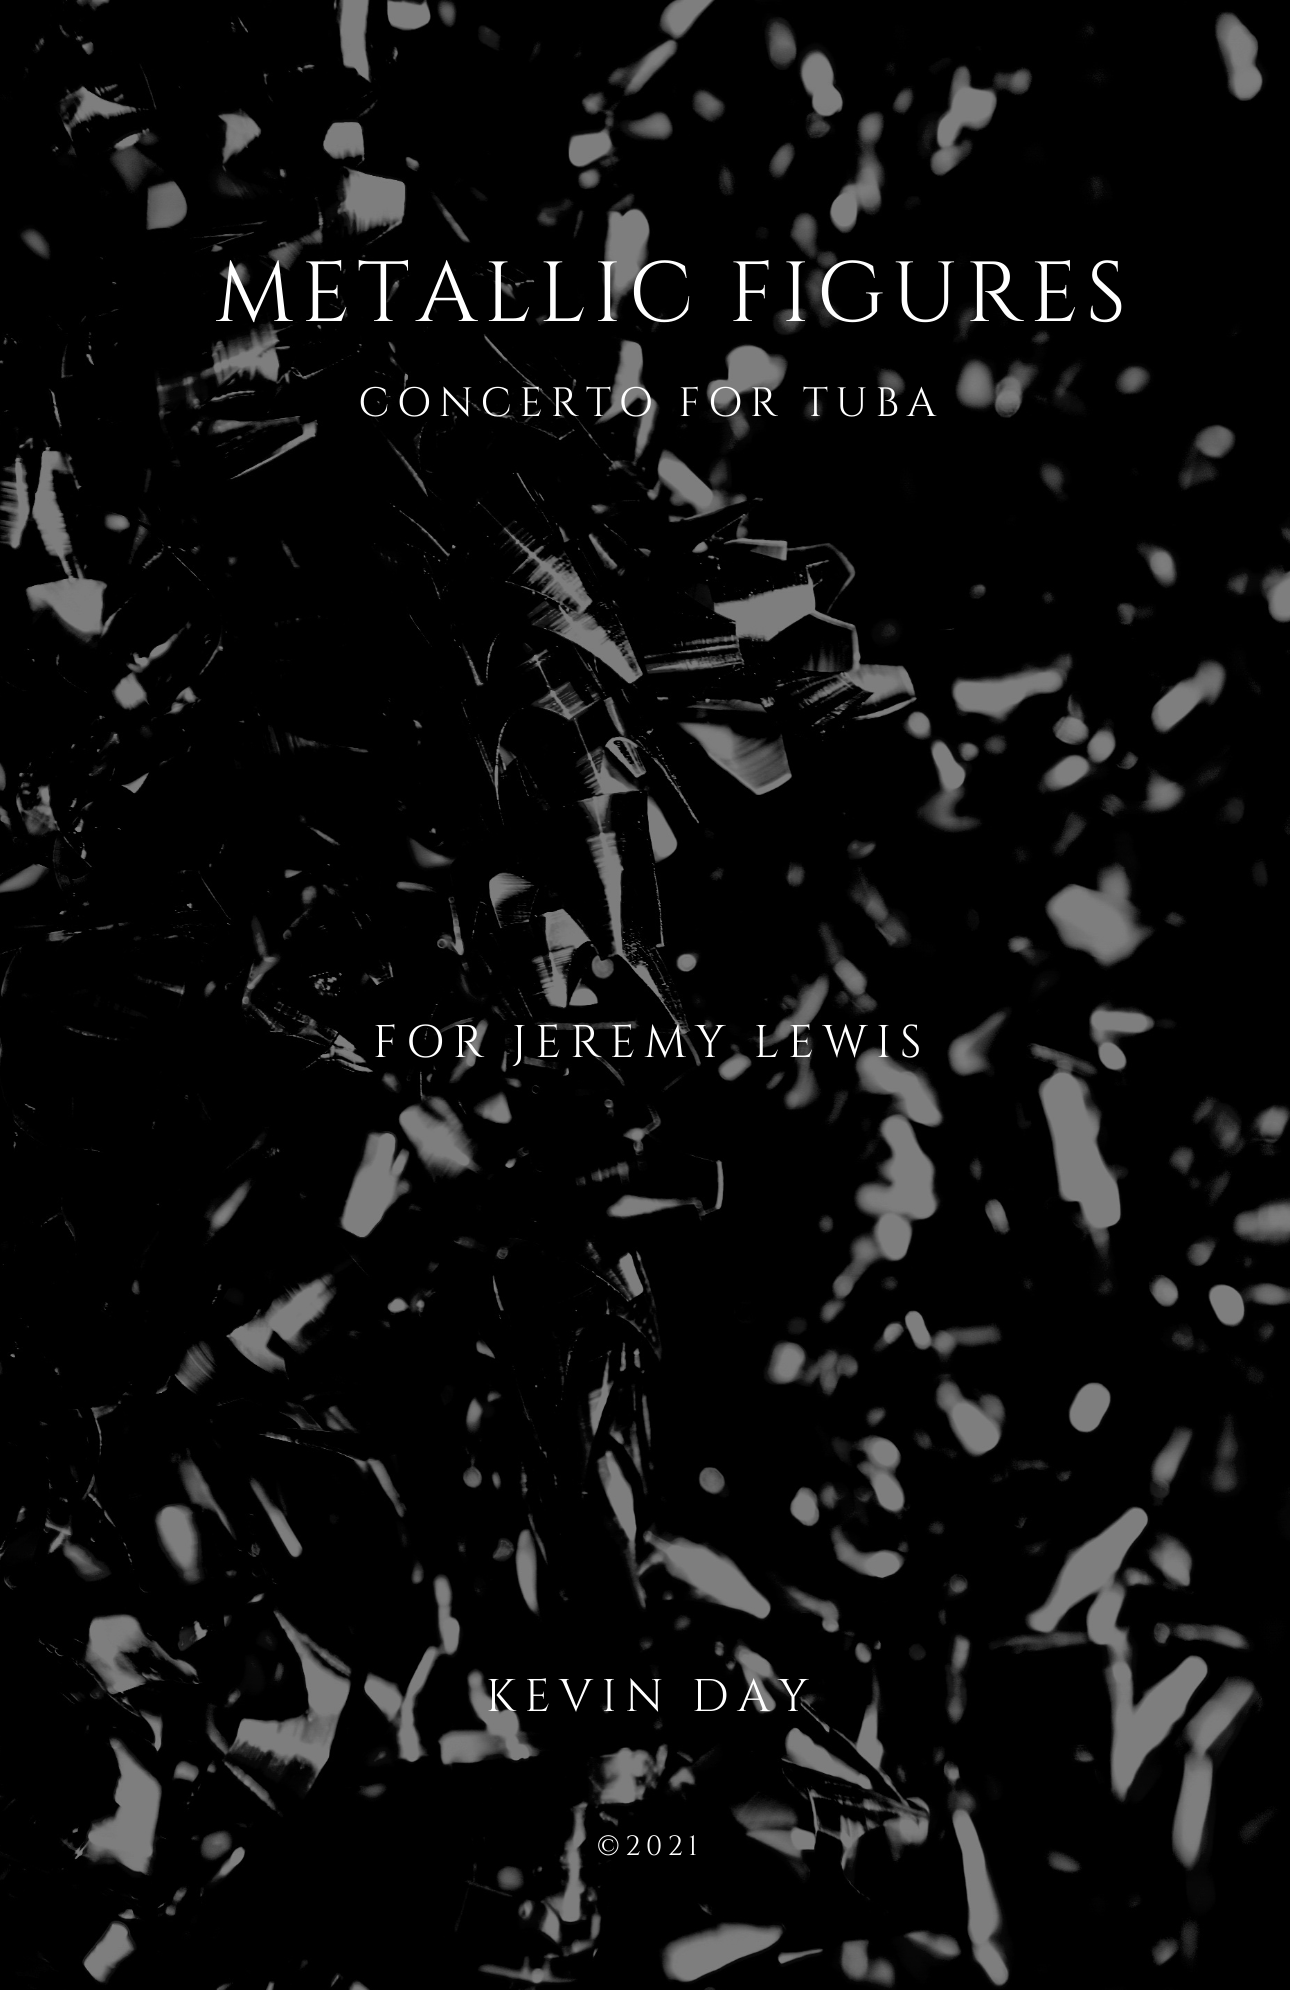 Day, Kevin - Metallic Figures (Tuba Concerto)